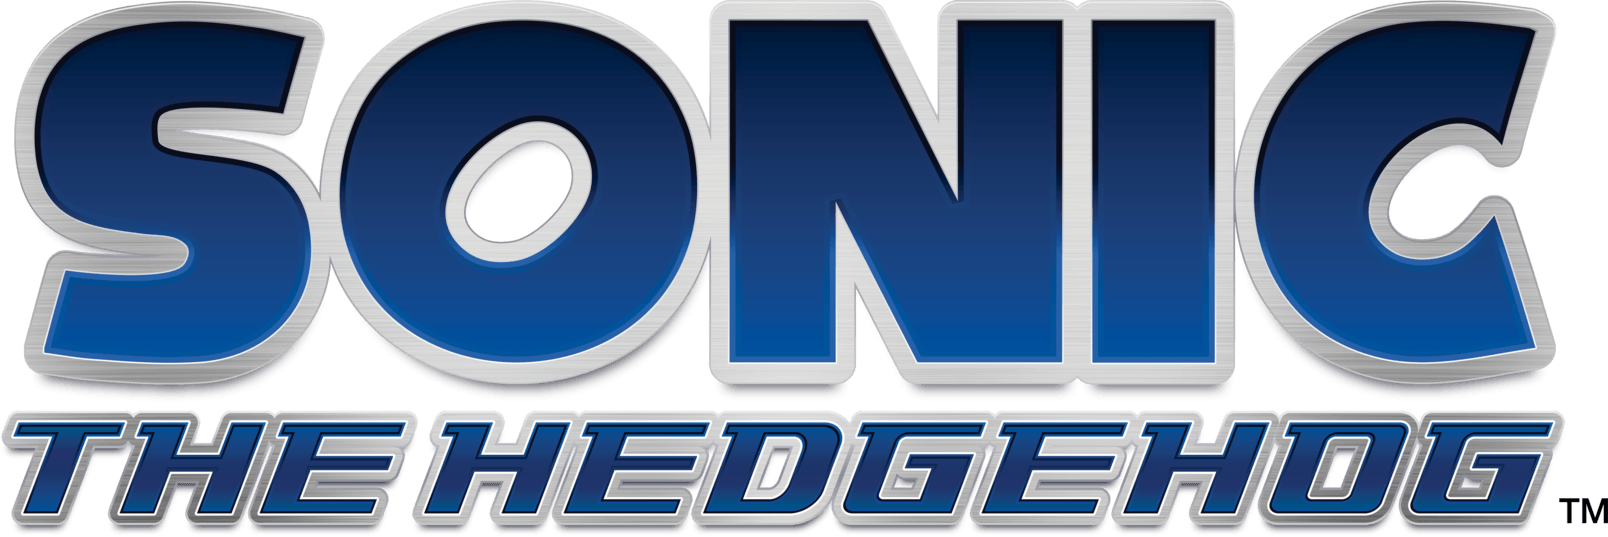 2006 Logo - File:Sonic The Hedgehog logo (2006).png - Wikimedia Commons